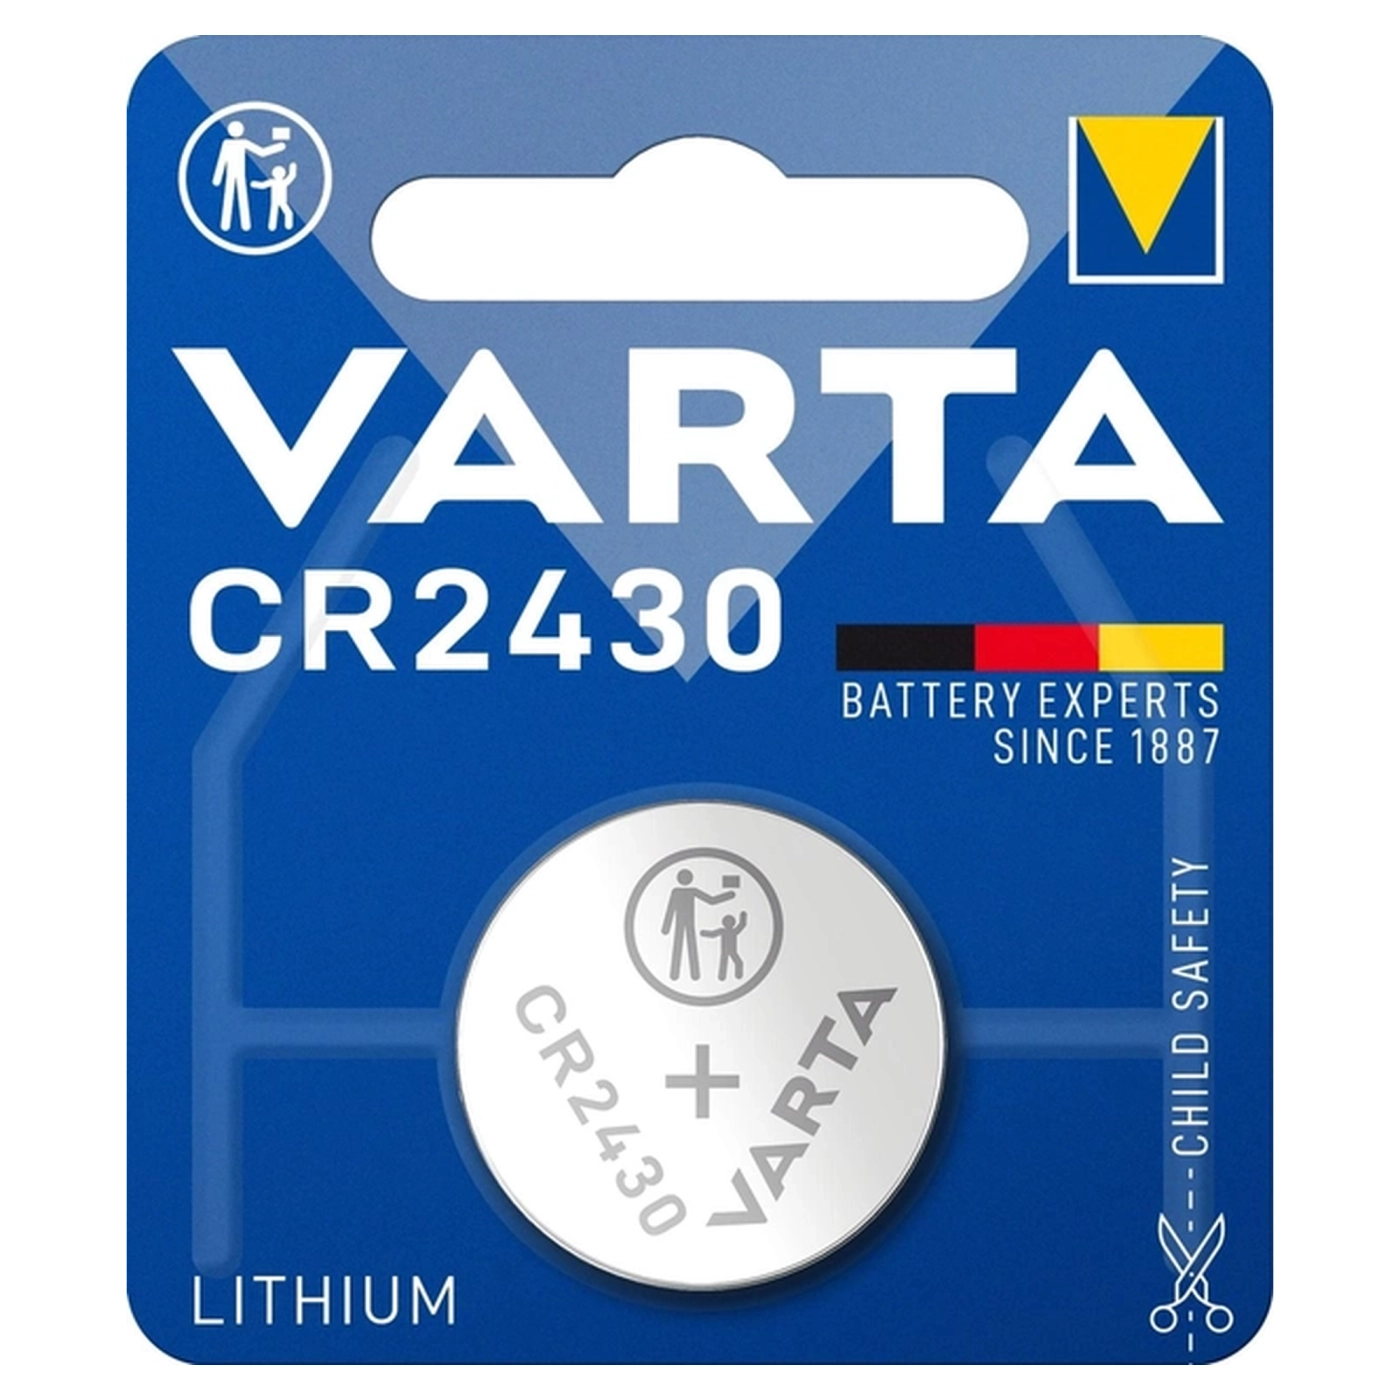 Купить Батарейка VARTA CR 2430 BLI 1 Lithium (6430101401) - фото 1